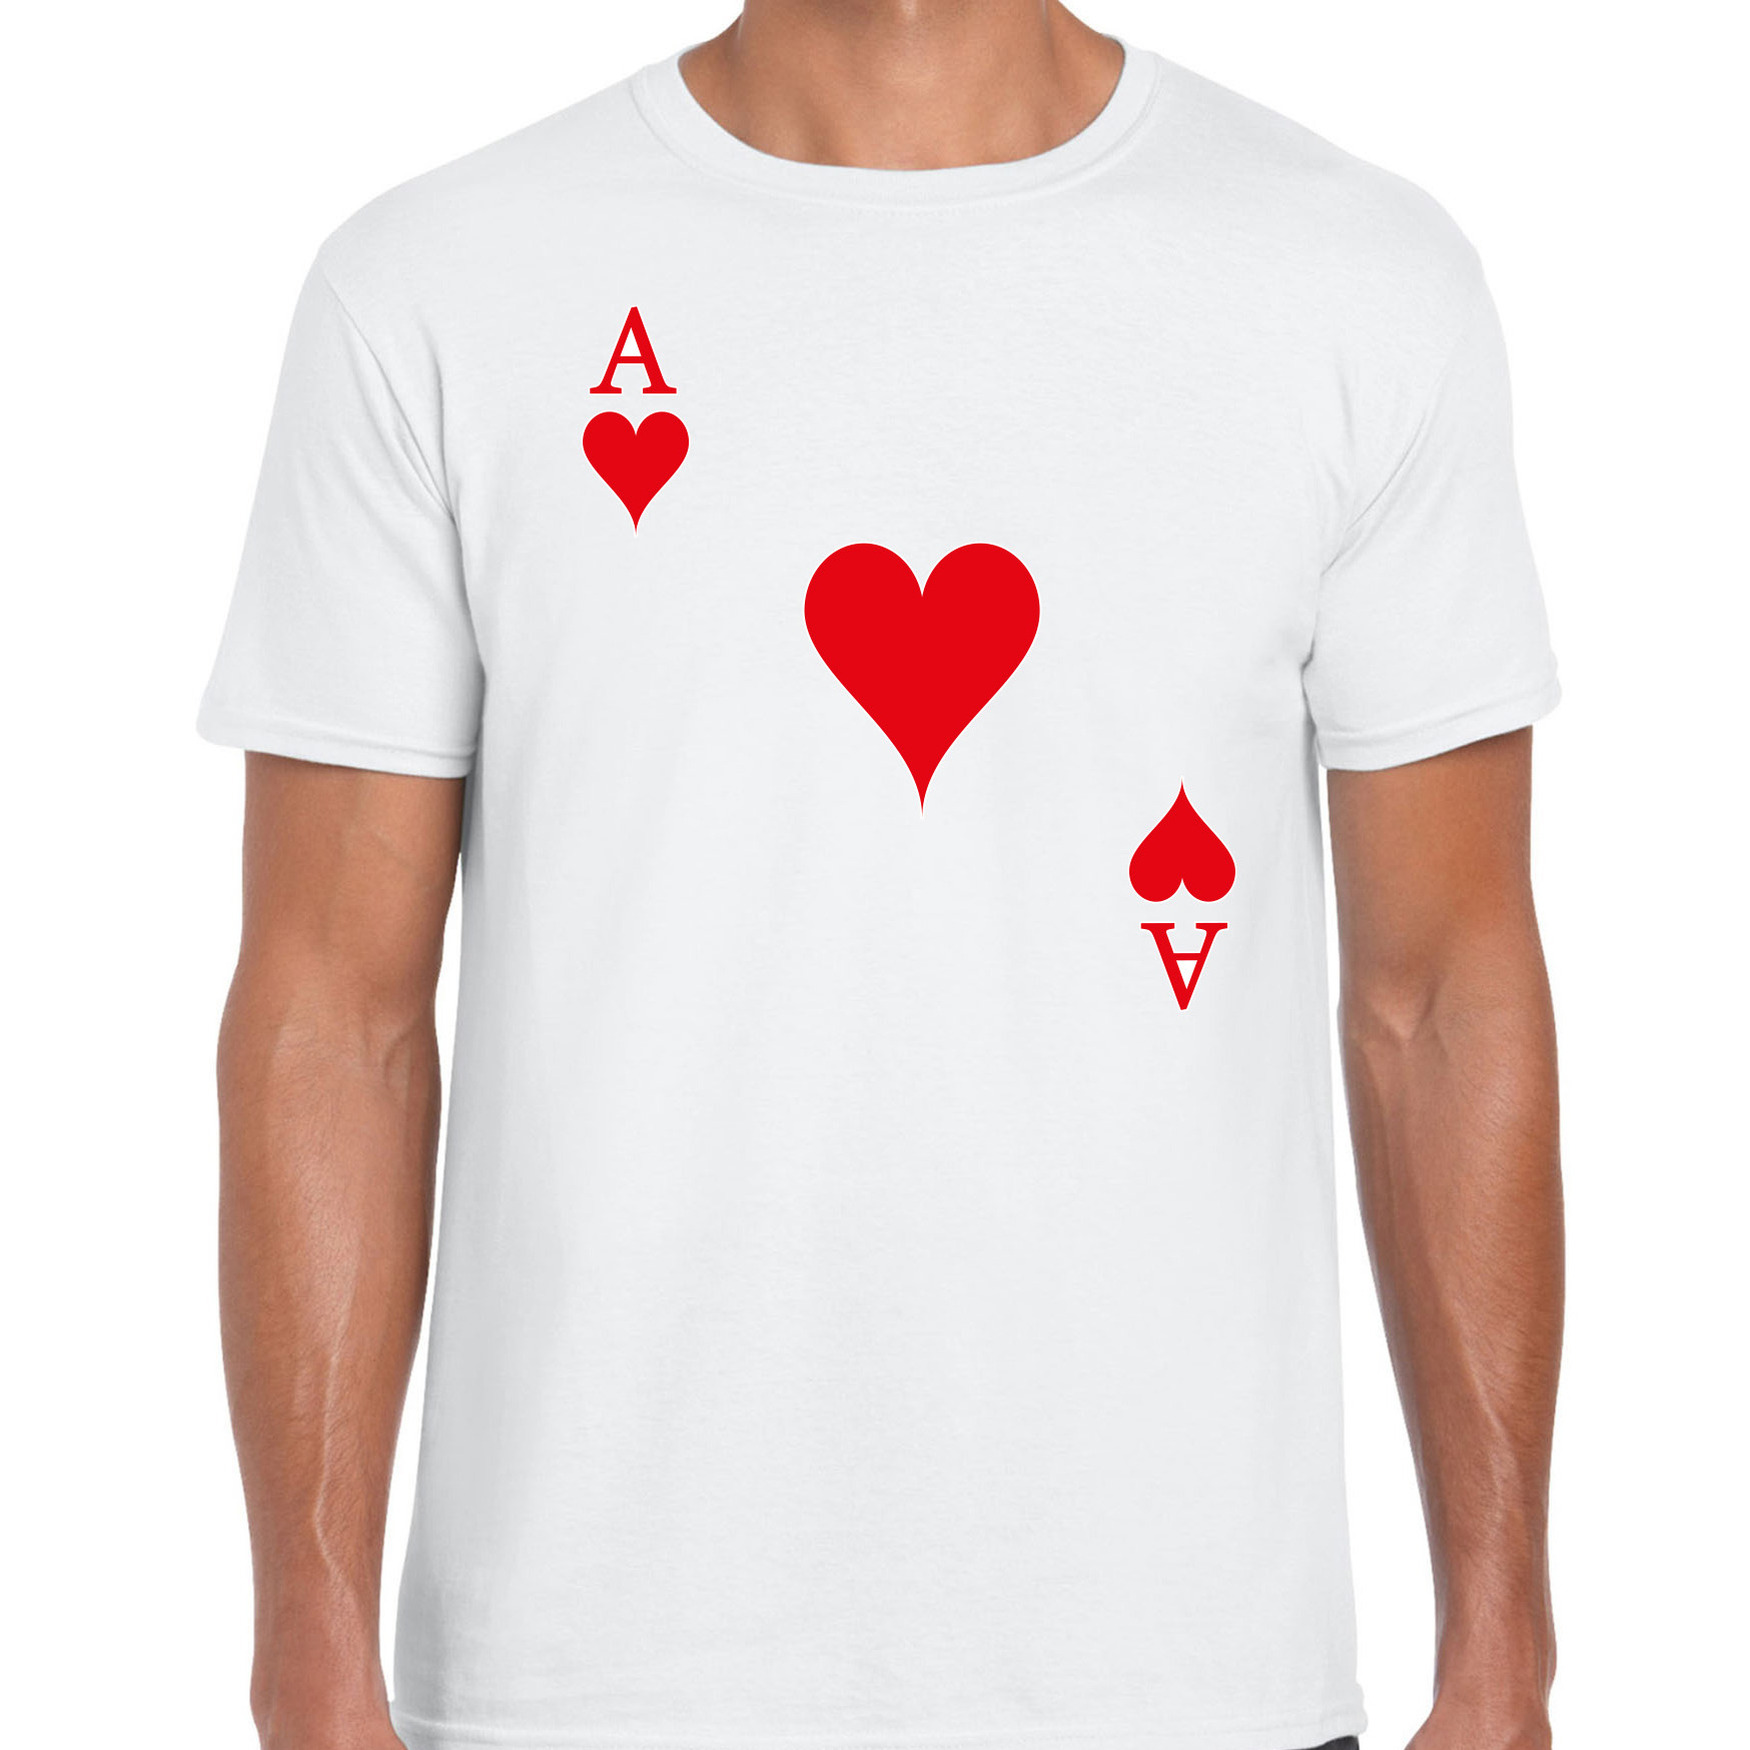 Bellatio Decorations casino thema verkleed t-shirt heren - harten aas - wit - poker t-shirt